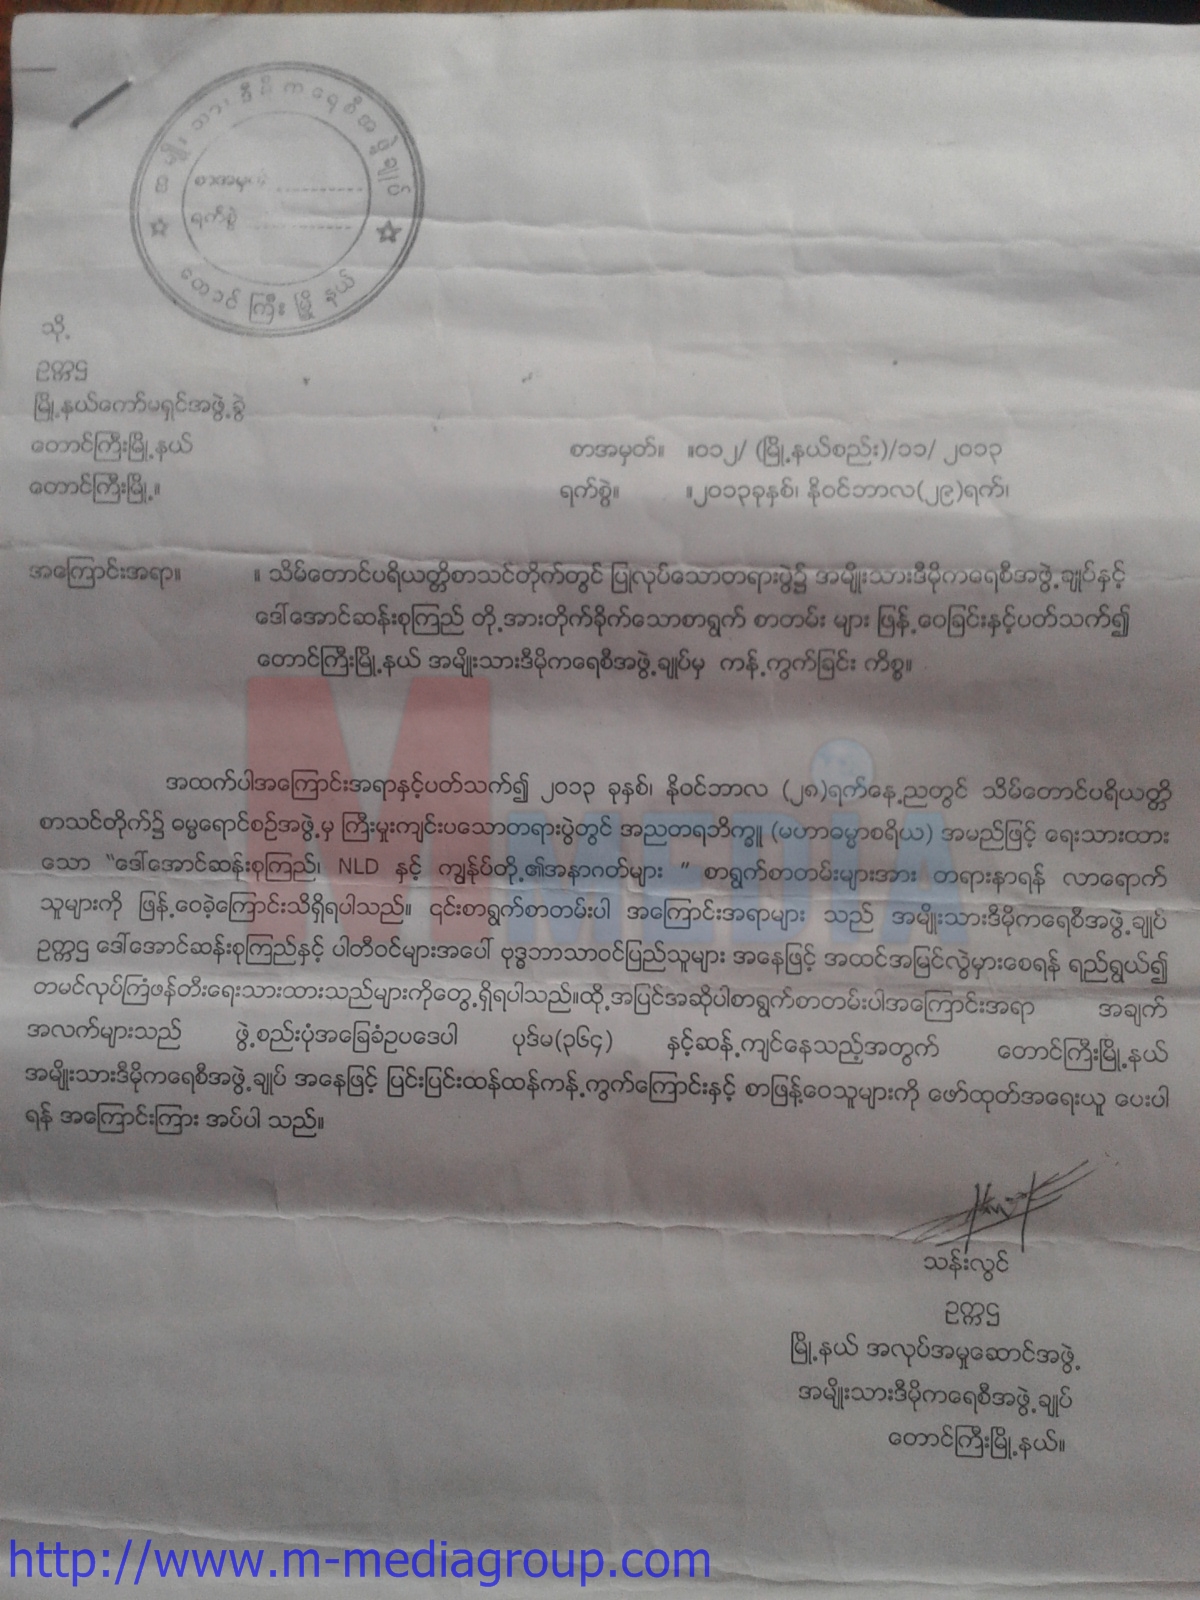 Anti NLD propaganda pamphlets distributed in Taung Gyi 969 sermon